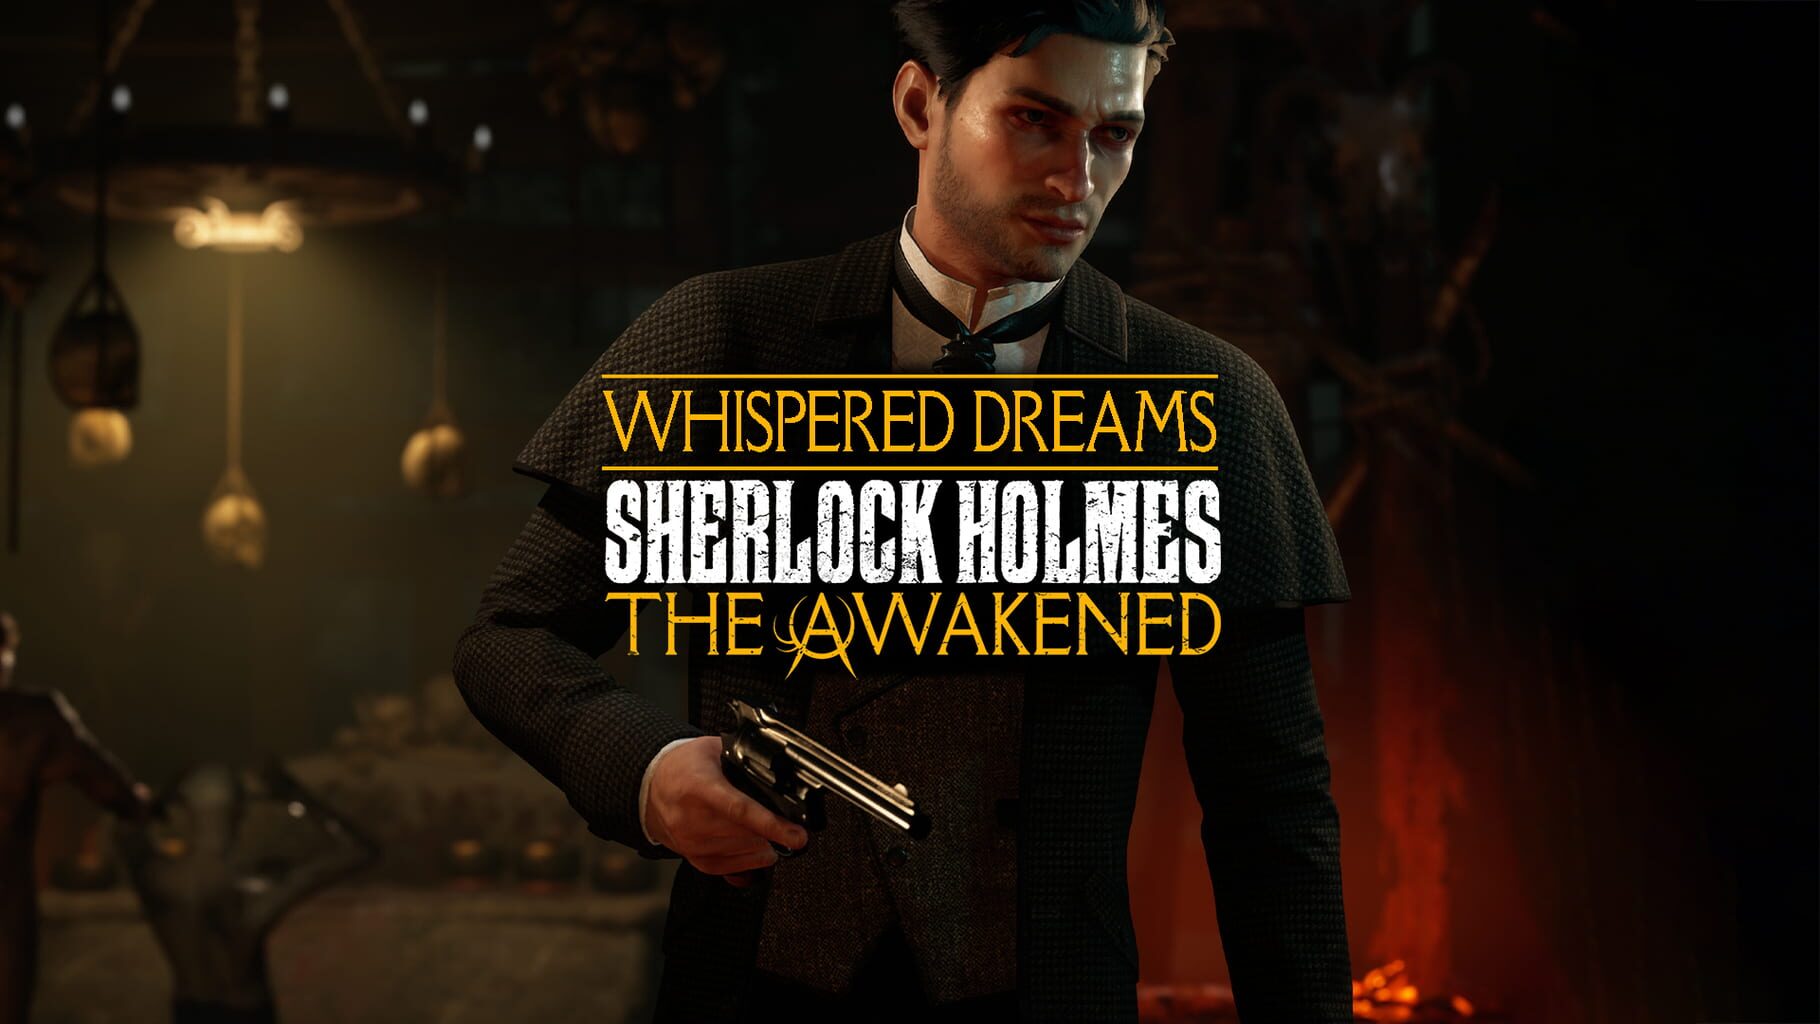 Arte - Sherlock Holmes: The Awakened - The Whispered Dreams